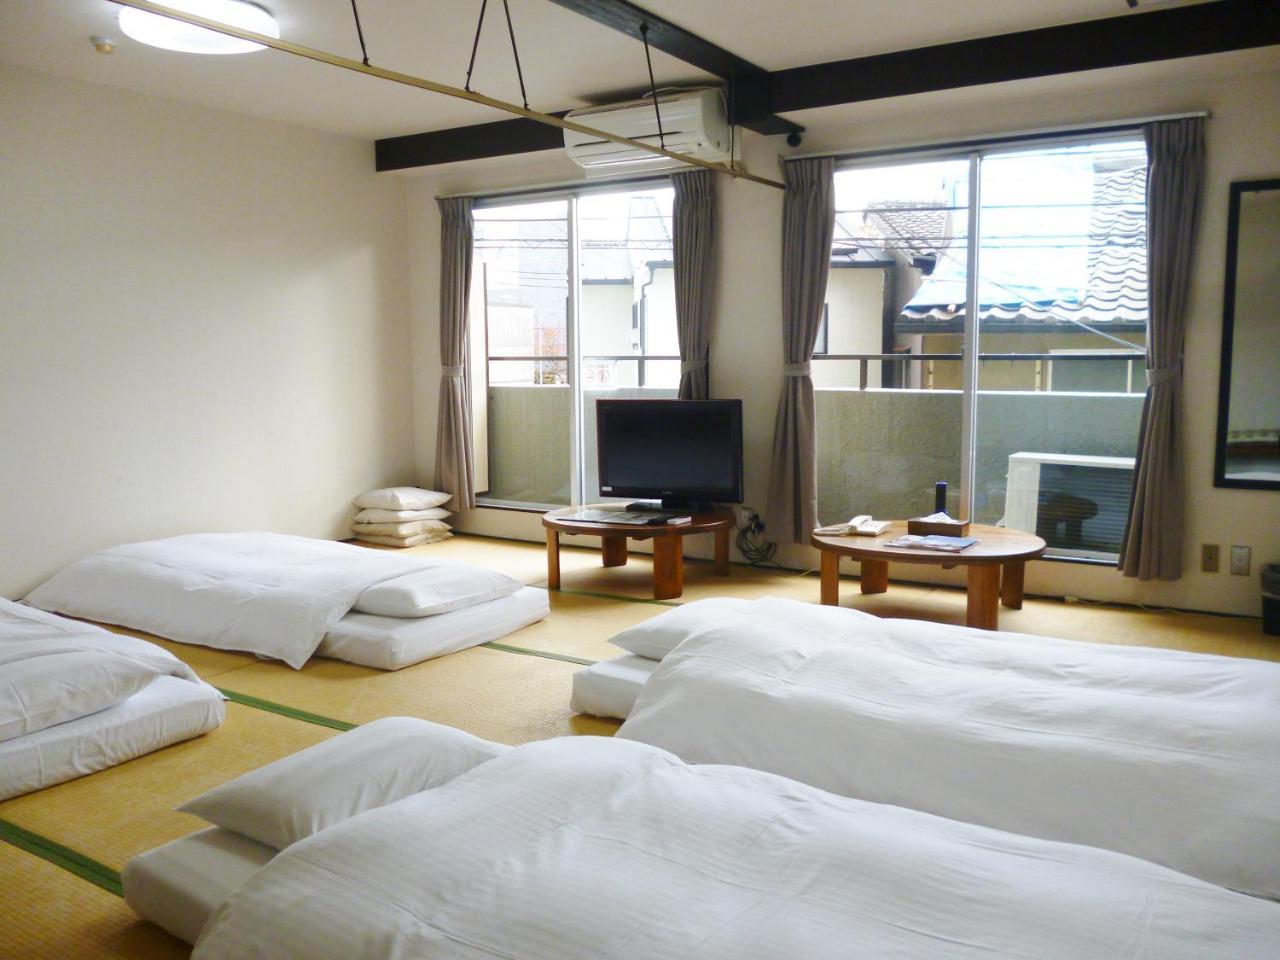 Econo-Inn Kioto Exterior foto